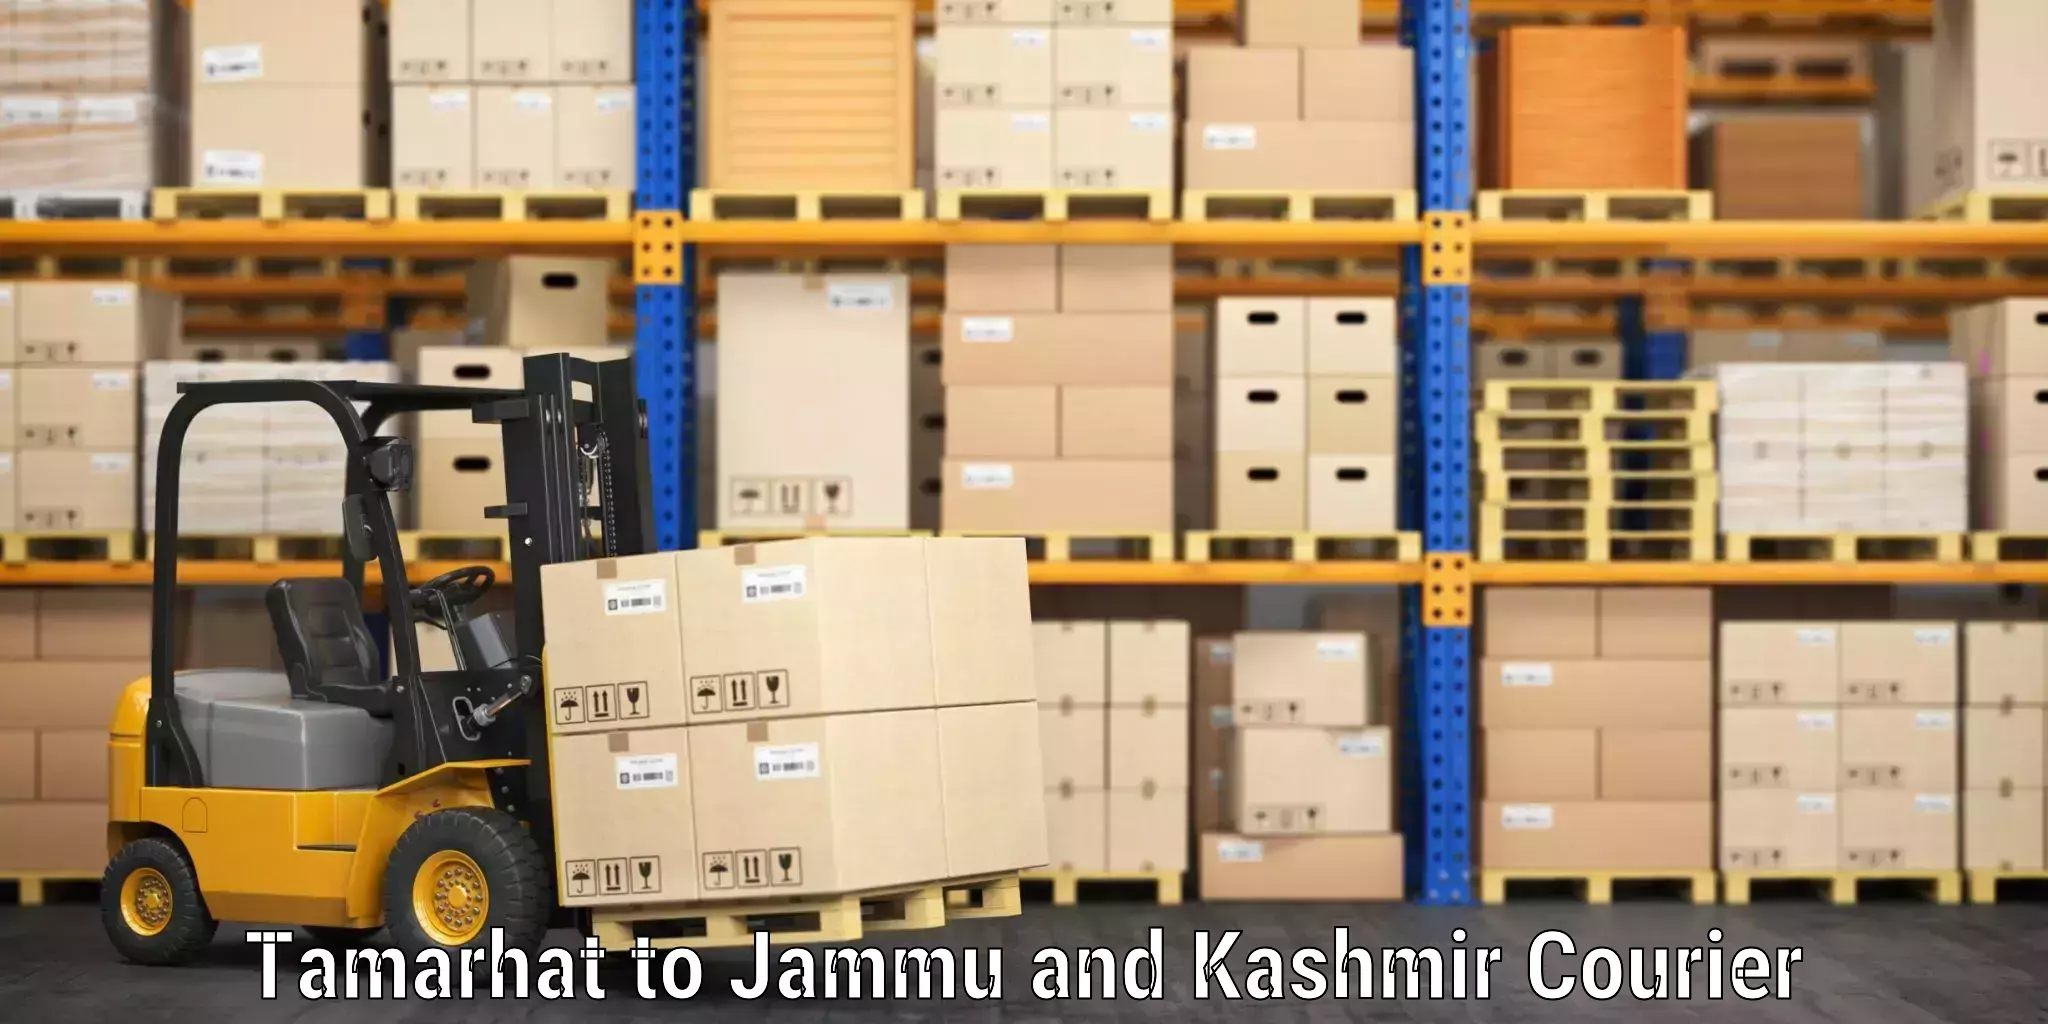 Baggage transport scheduler Tamarhat to Jammu and Kashmir